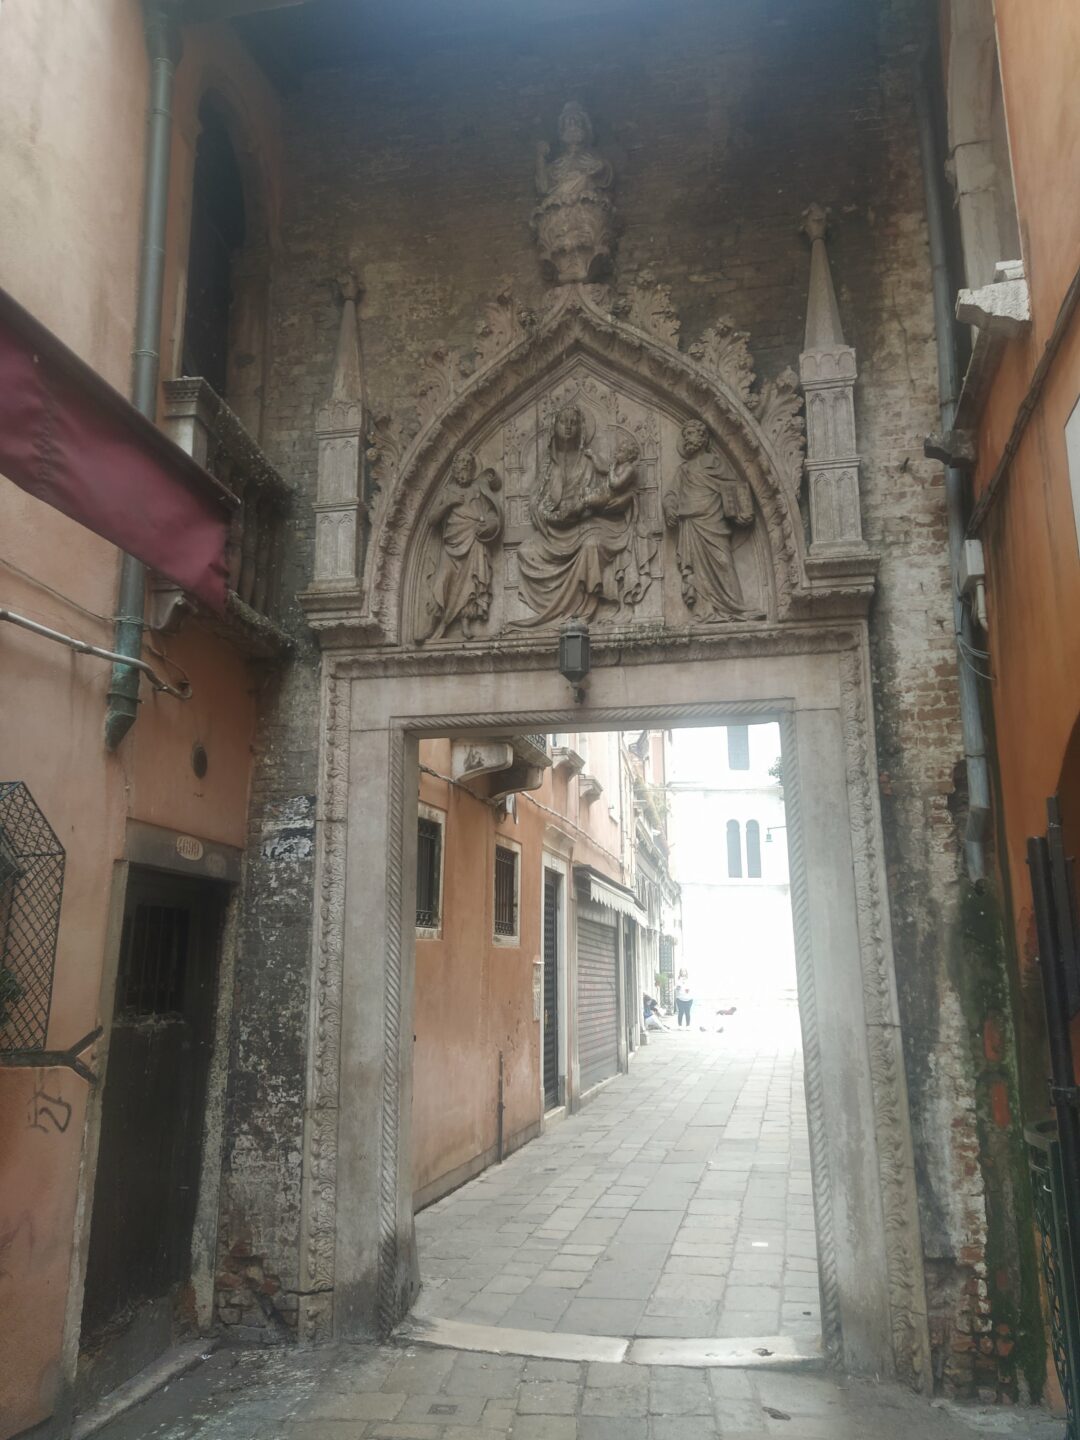 Callejones de Venecia